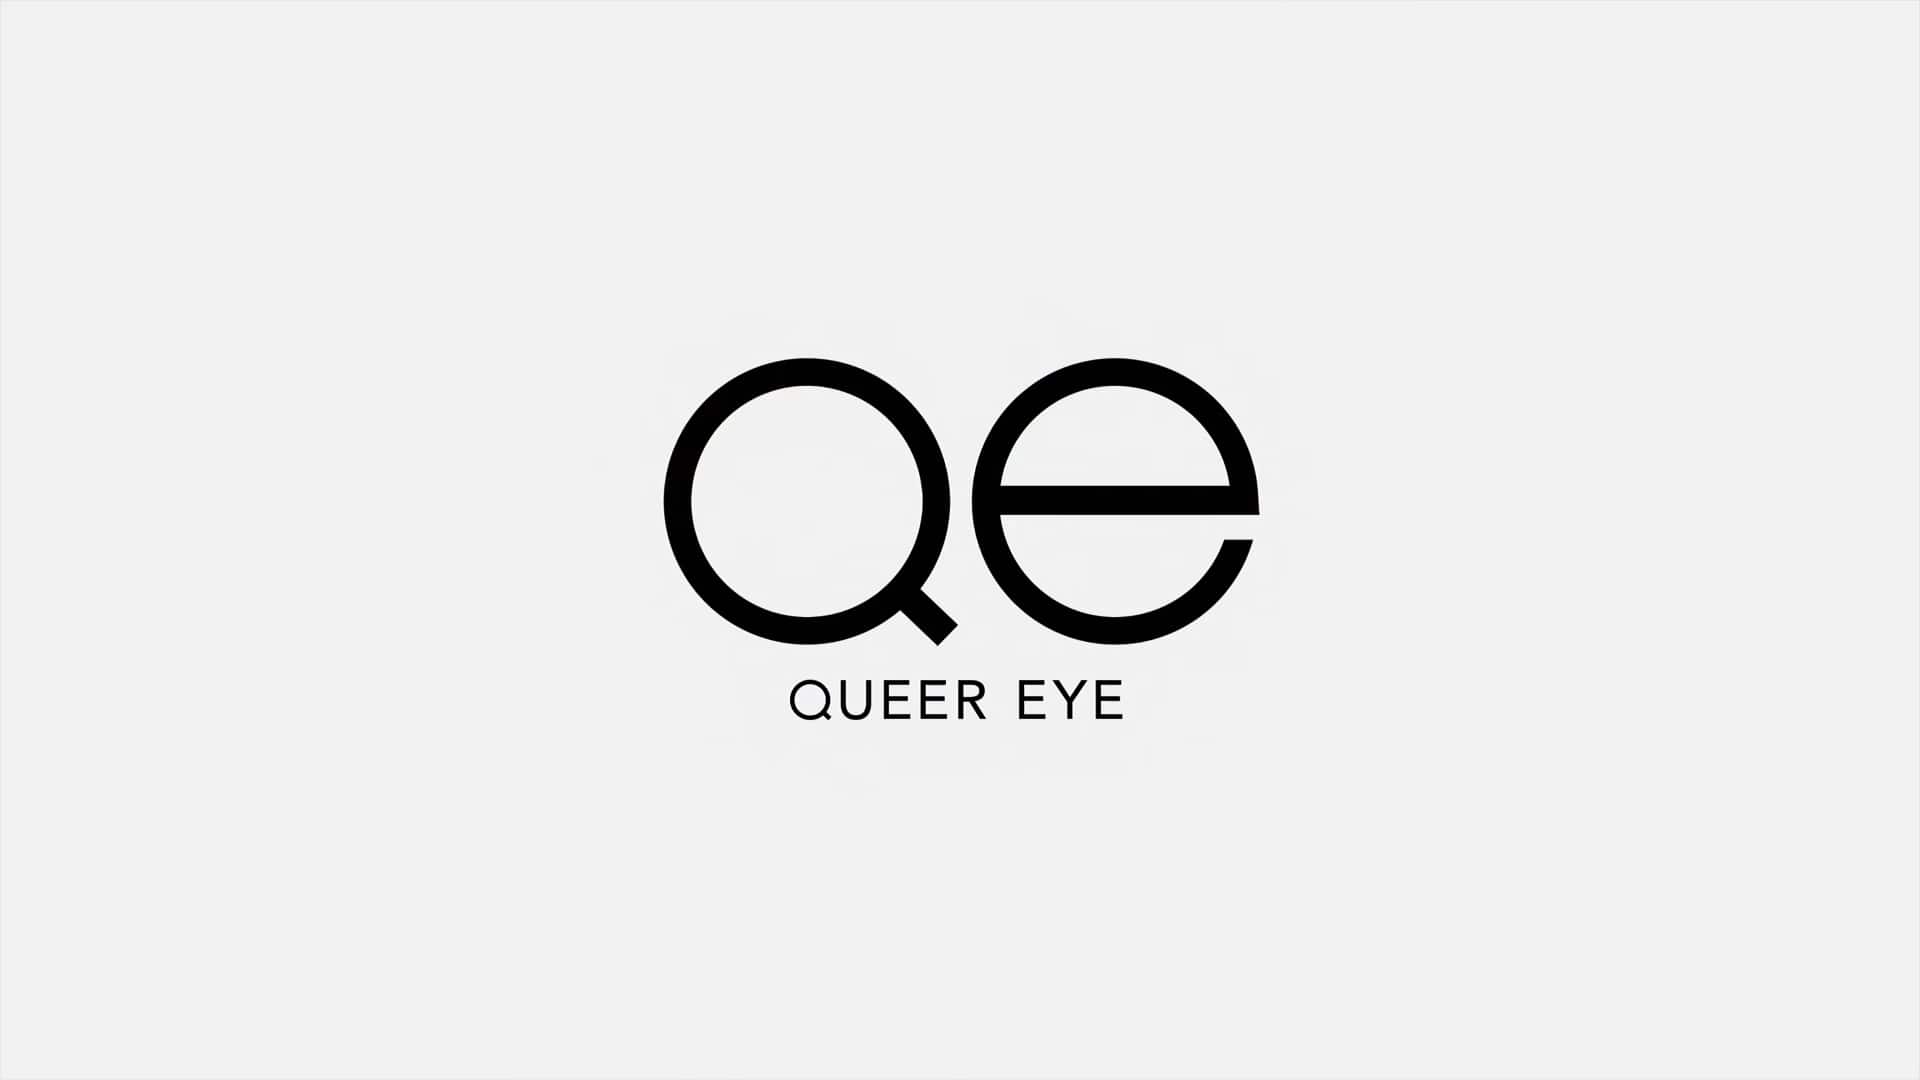 Netflix Queer Eye Season 6 Announcement, Coming to Netflix in December 2021